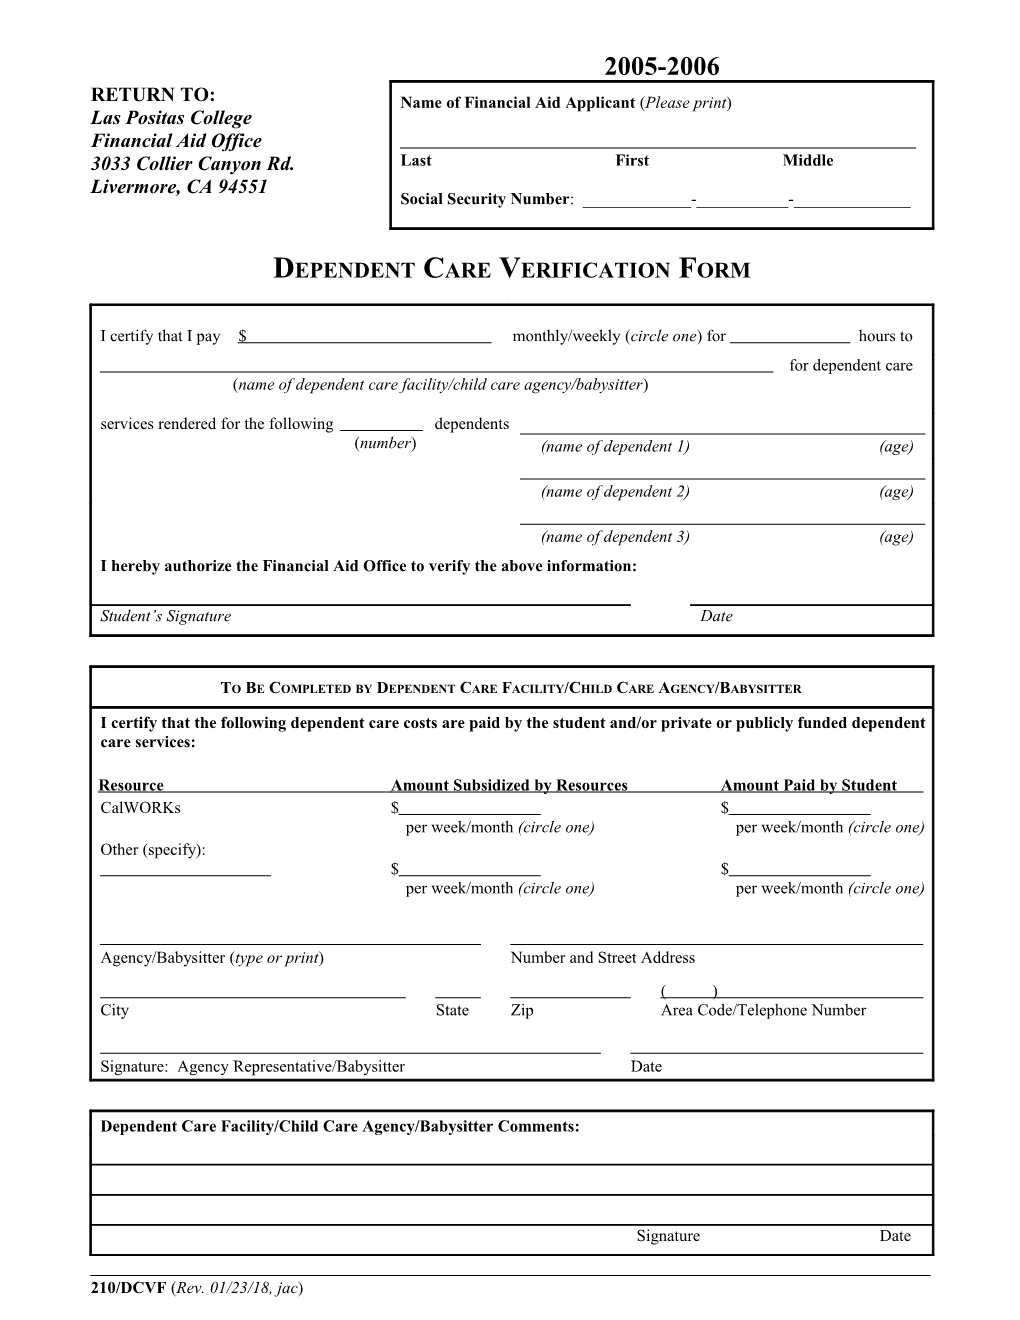 Dependent Care Verification Form